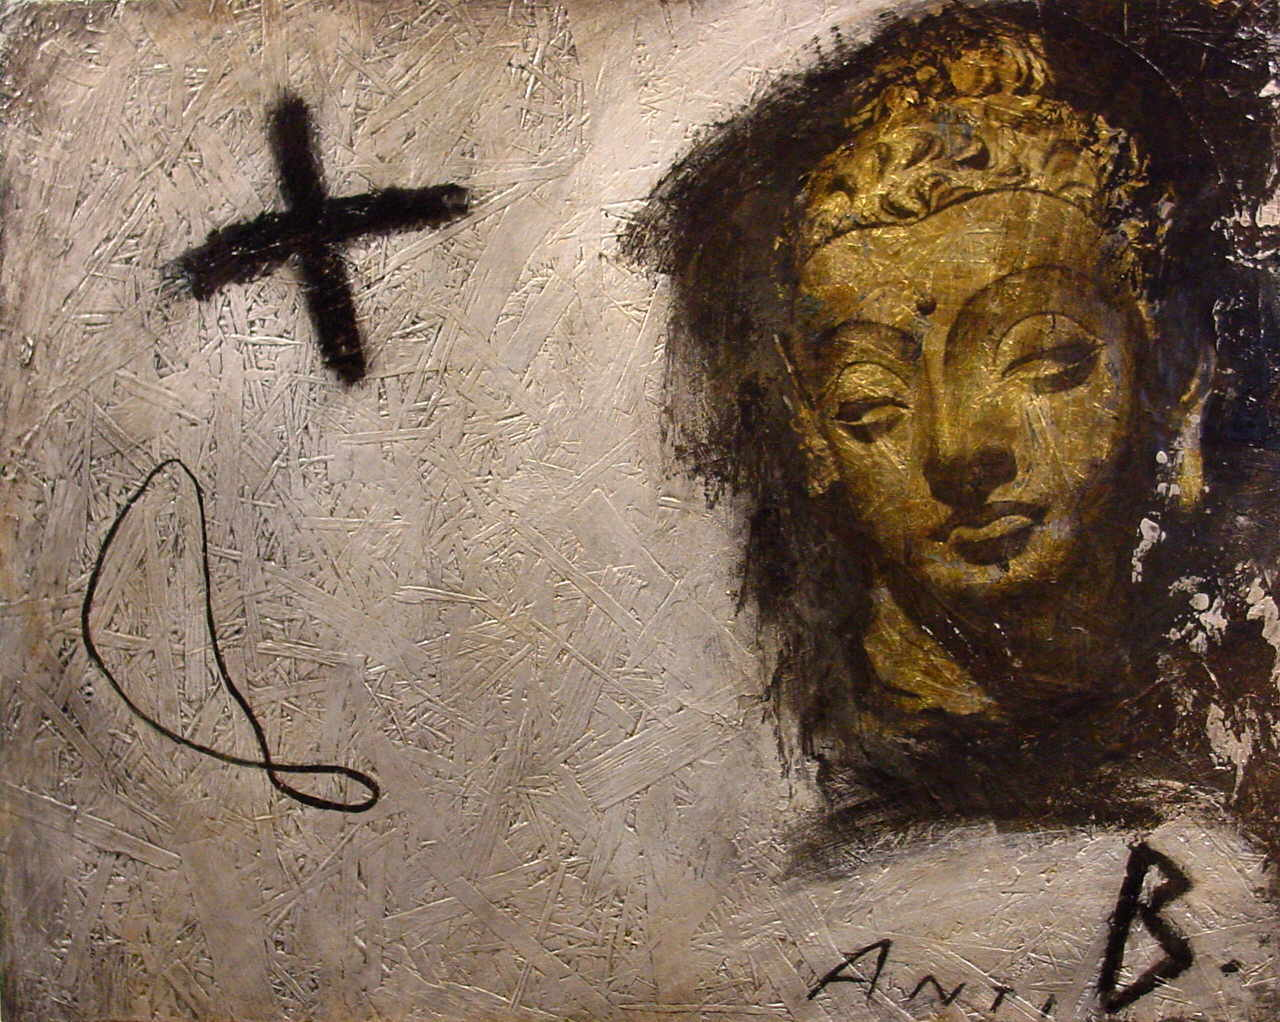 Dewitt Zos 
"Buddha", 2002
Laserbedruckte Transparentfolie, Schlagmetall and Acrylic on OSB
49 x 62 cm